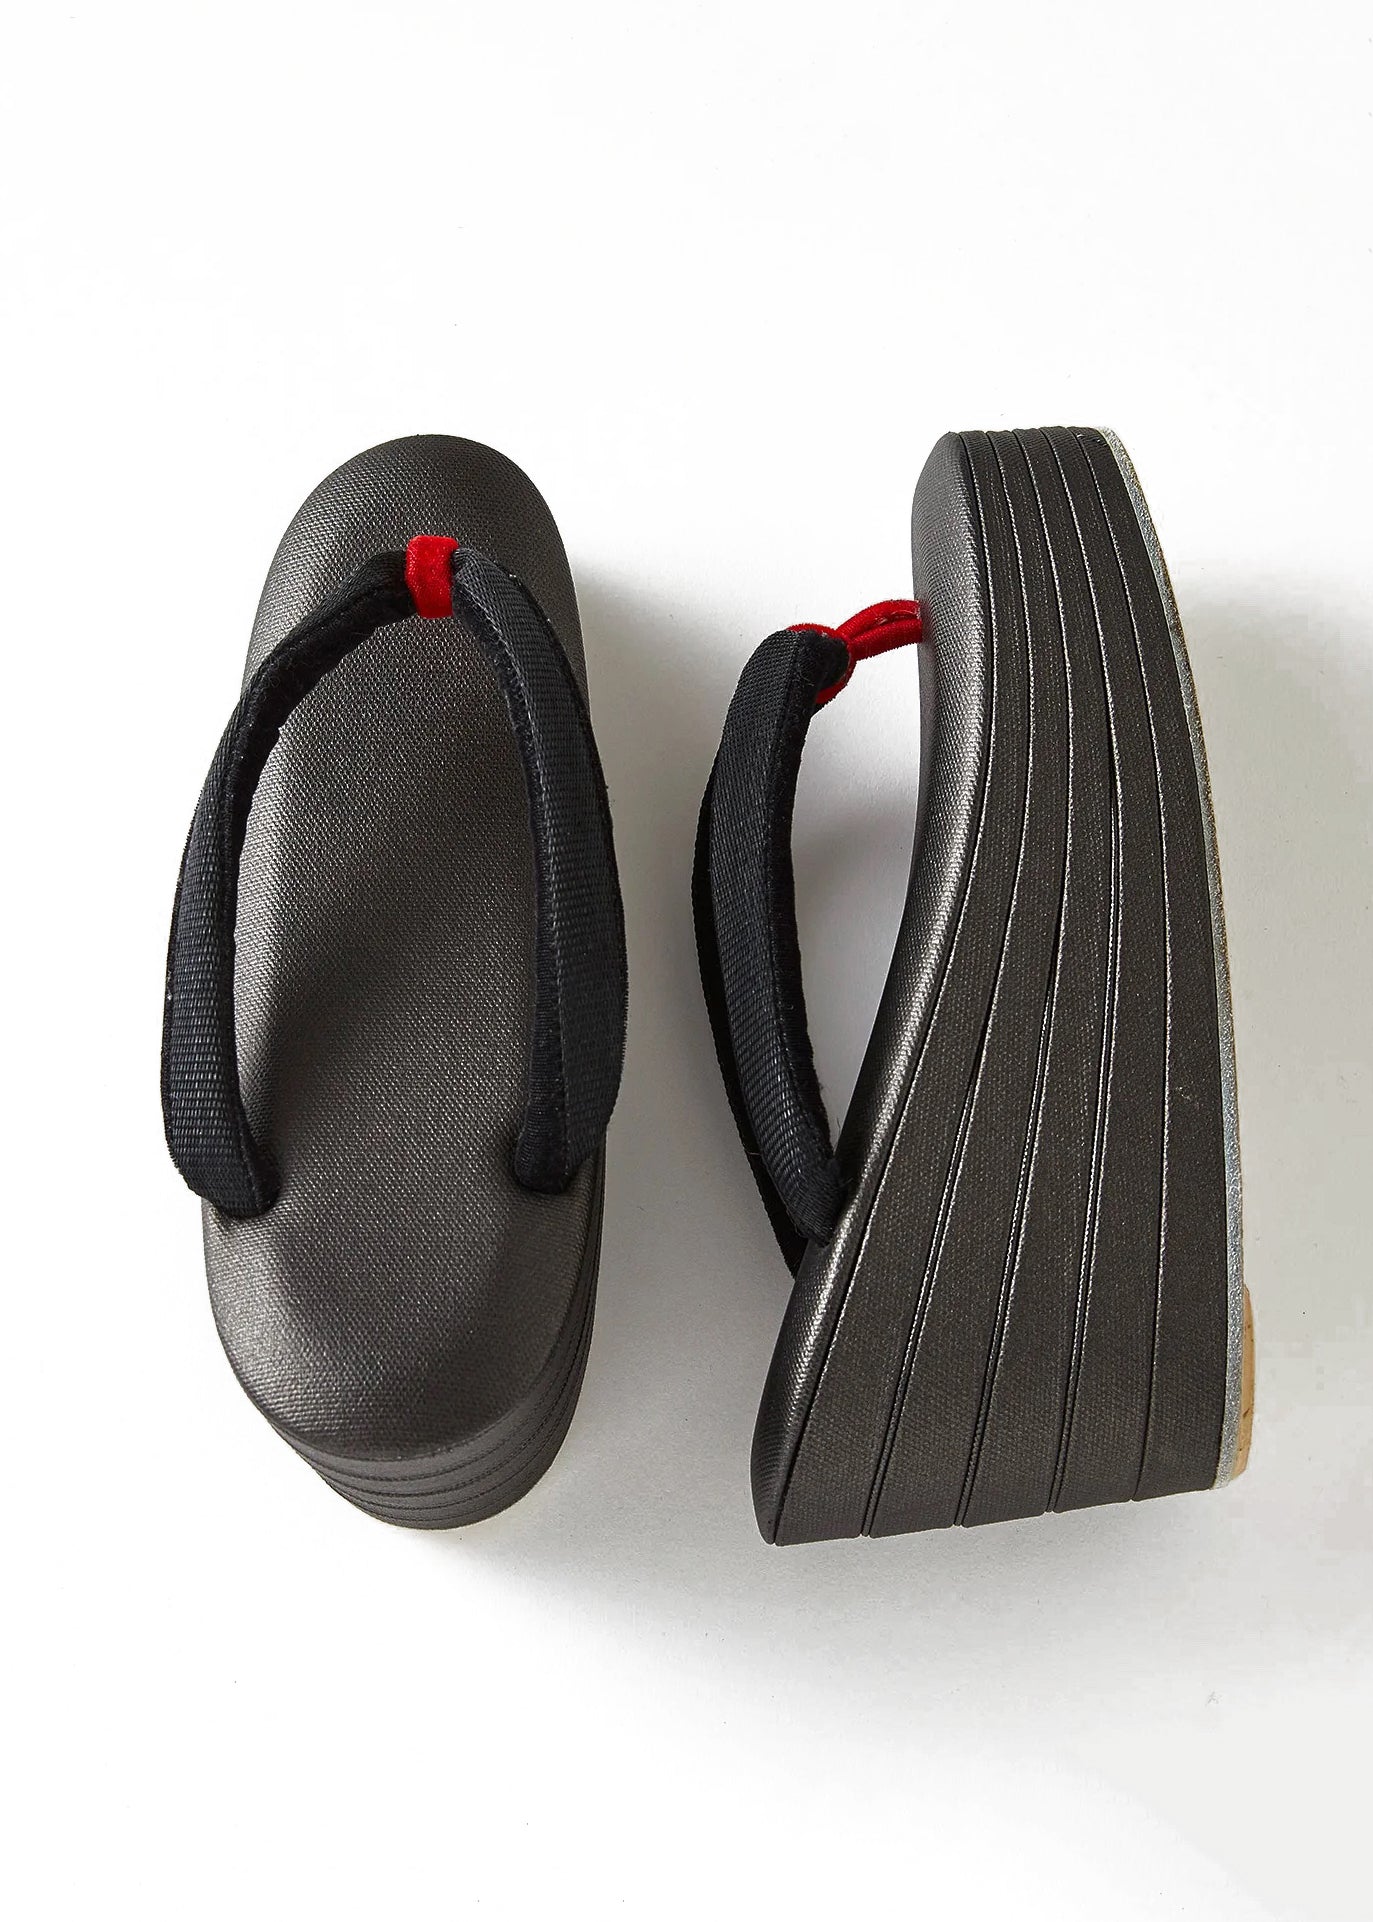 “Five-dan sandals canvas x horse hair” Kocho Kanda x KAPUKI